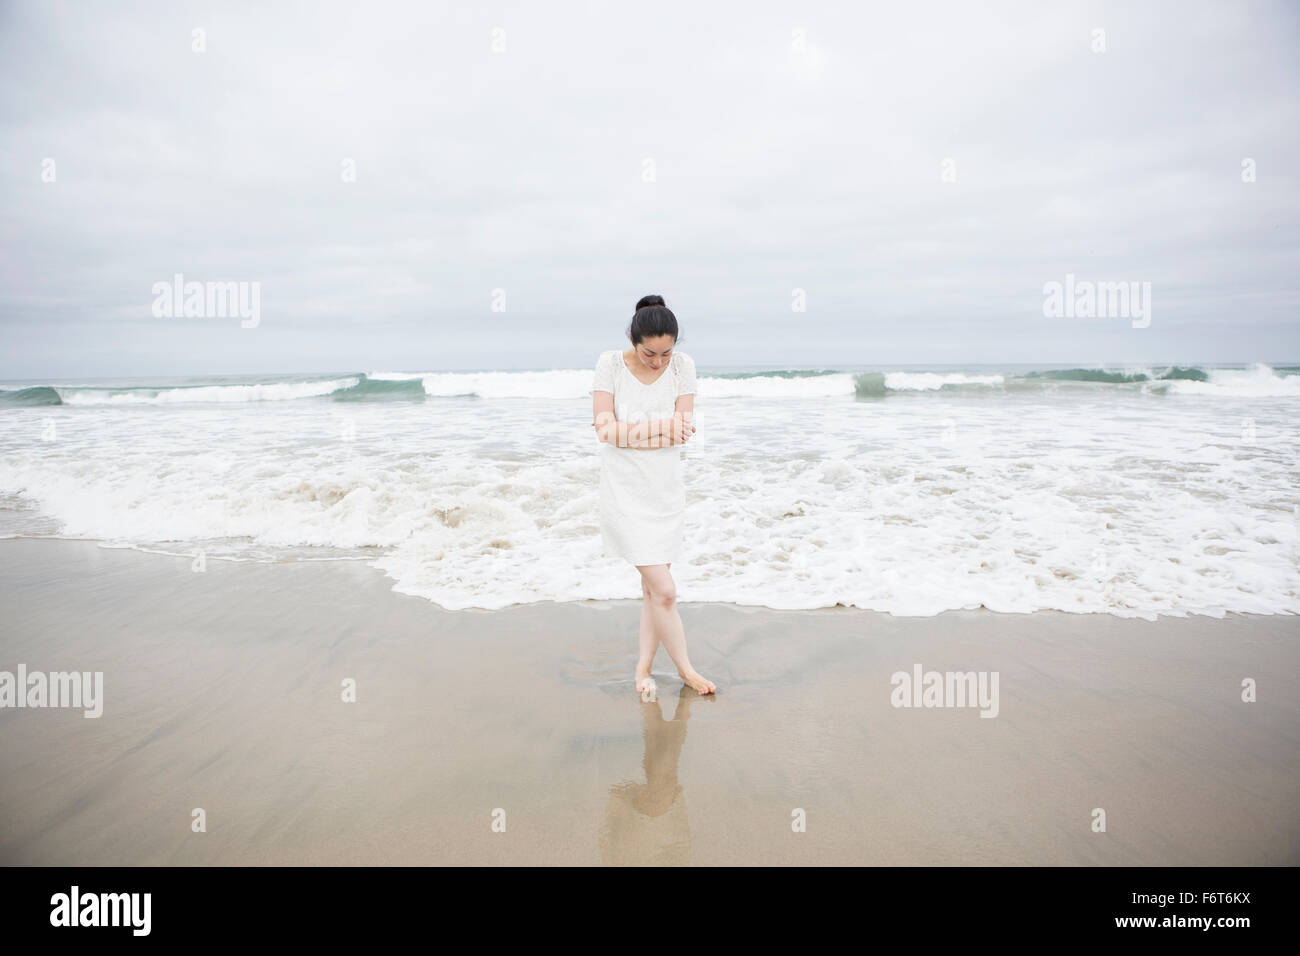 Woman standing near waves on beach Stock Photo